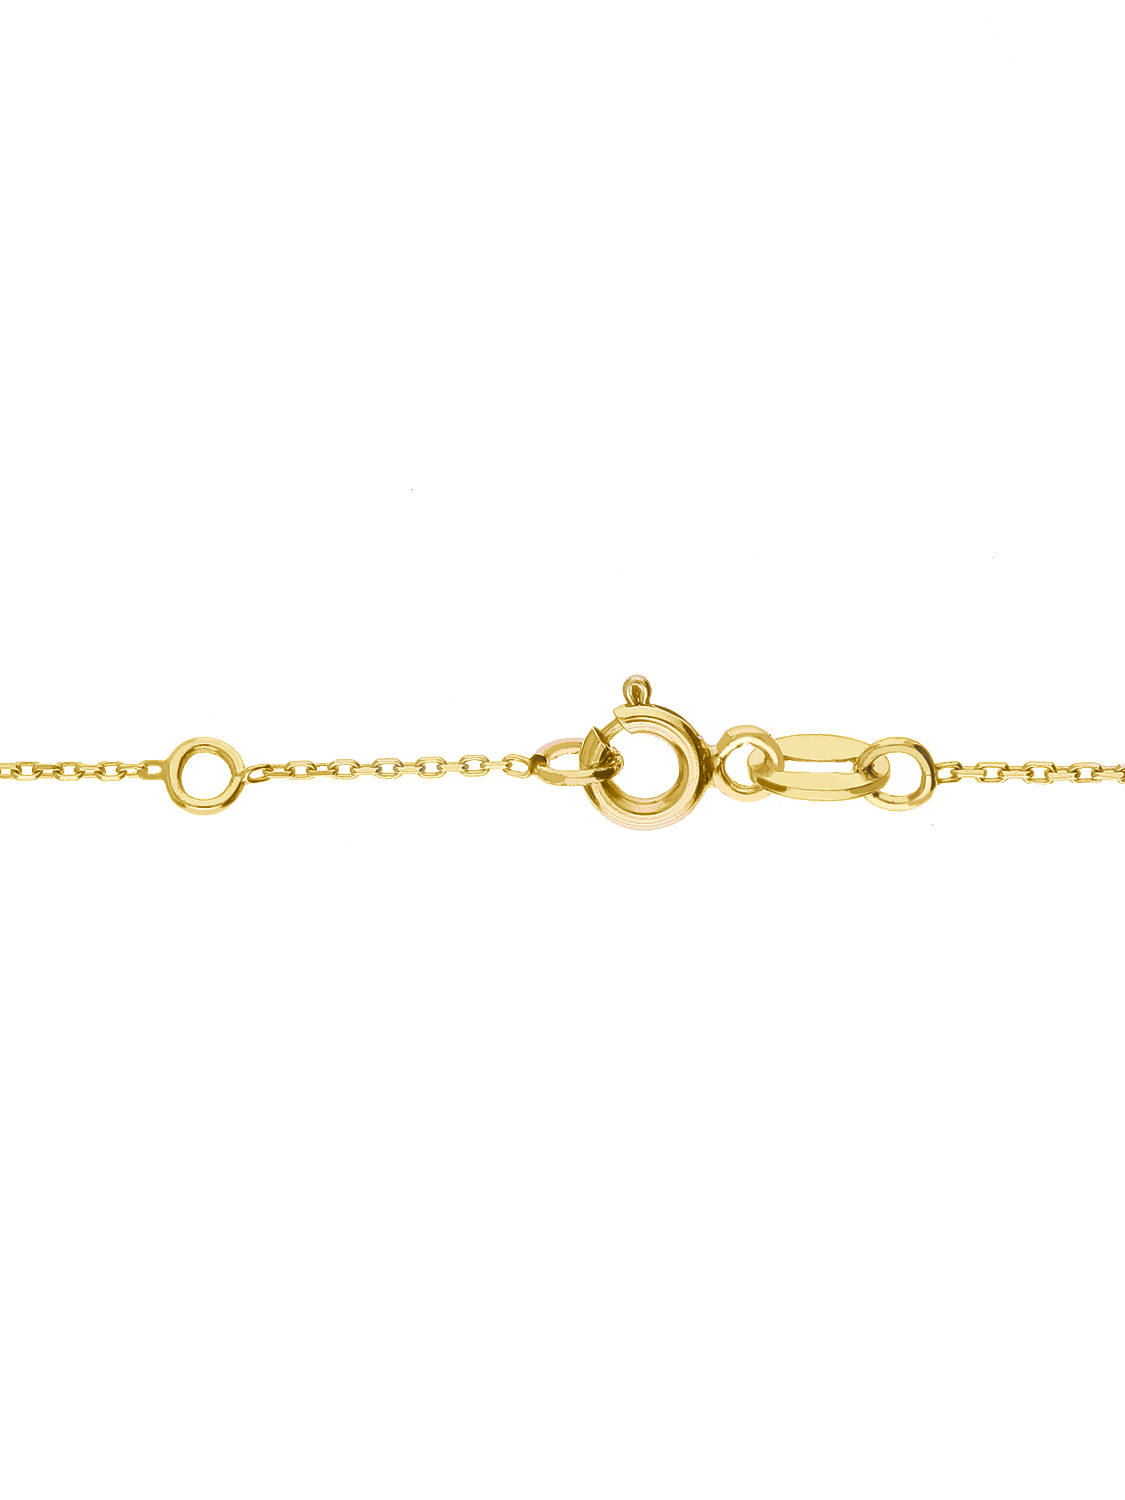 Aramira - Feder Armband 375 Gold